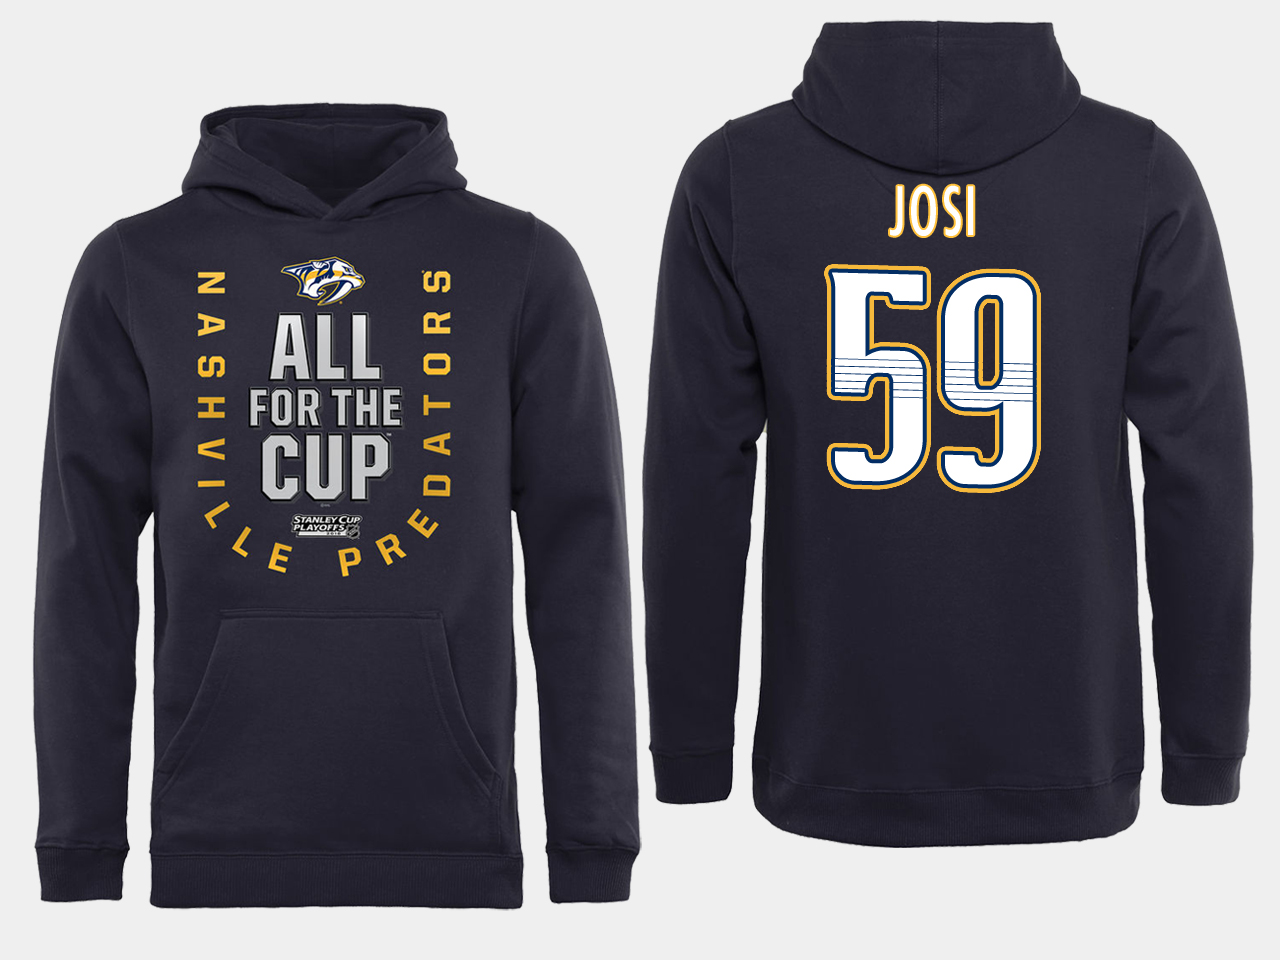 Men NHL Adidas Nashville Predators #59 Josi black ALL for the Cup hoodie